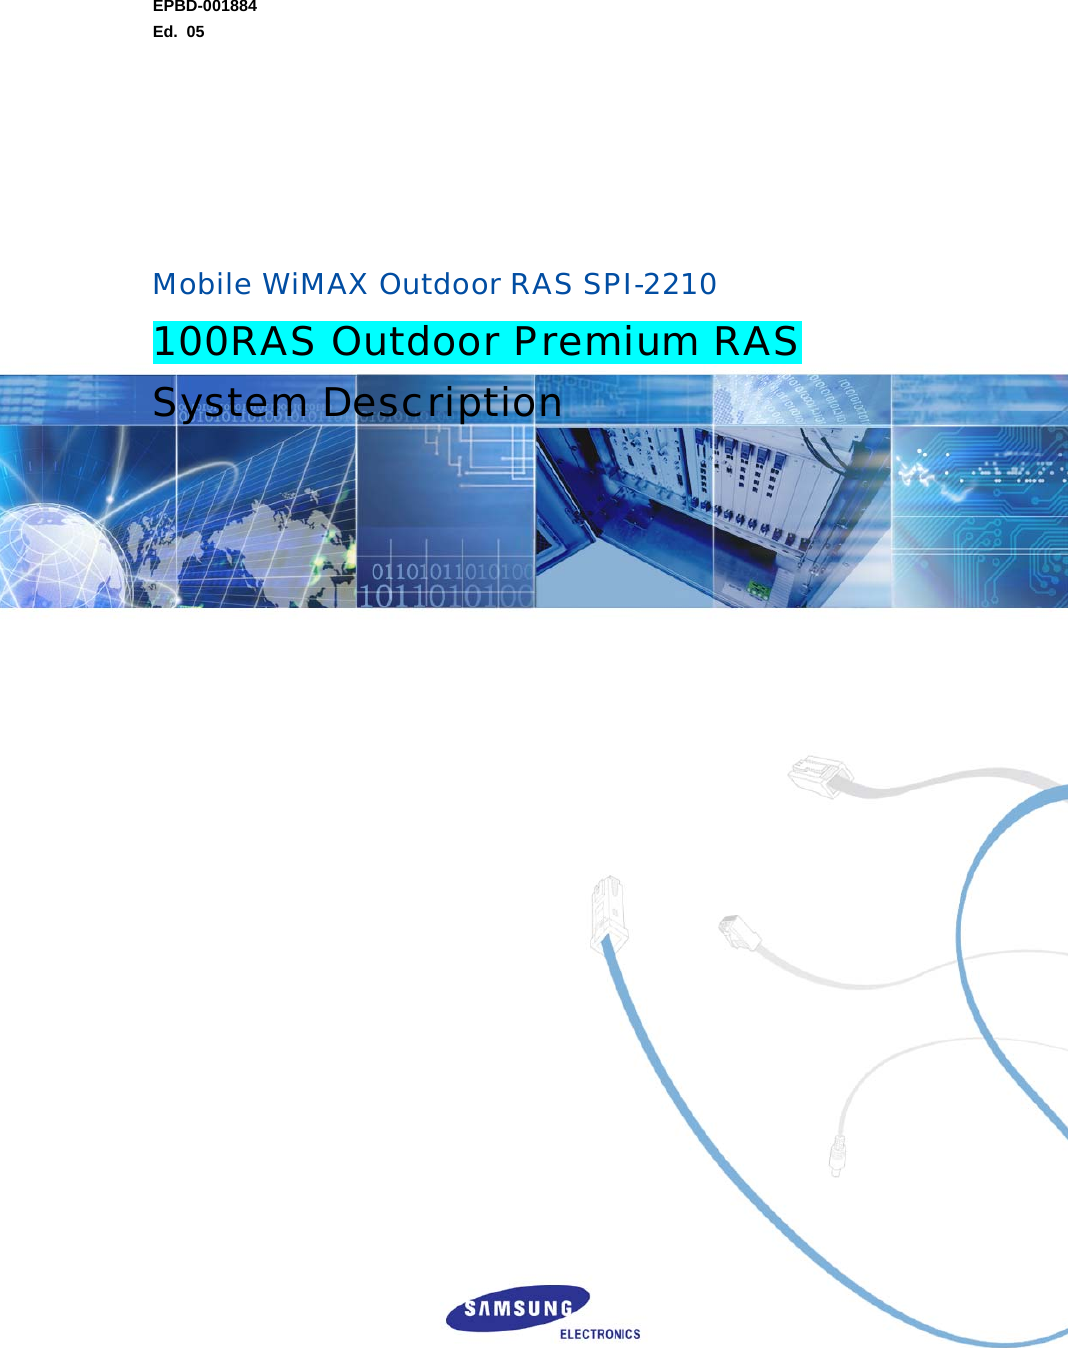 EPBD-001884 Ed. 05          Mobile WiMAX Outdoor RAS SPI-2210 100RAS Outdoor Premium RAS System Description  